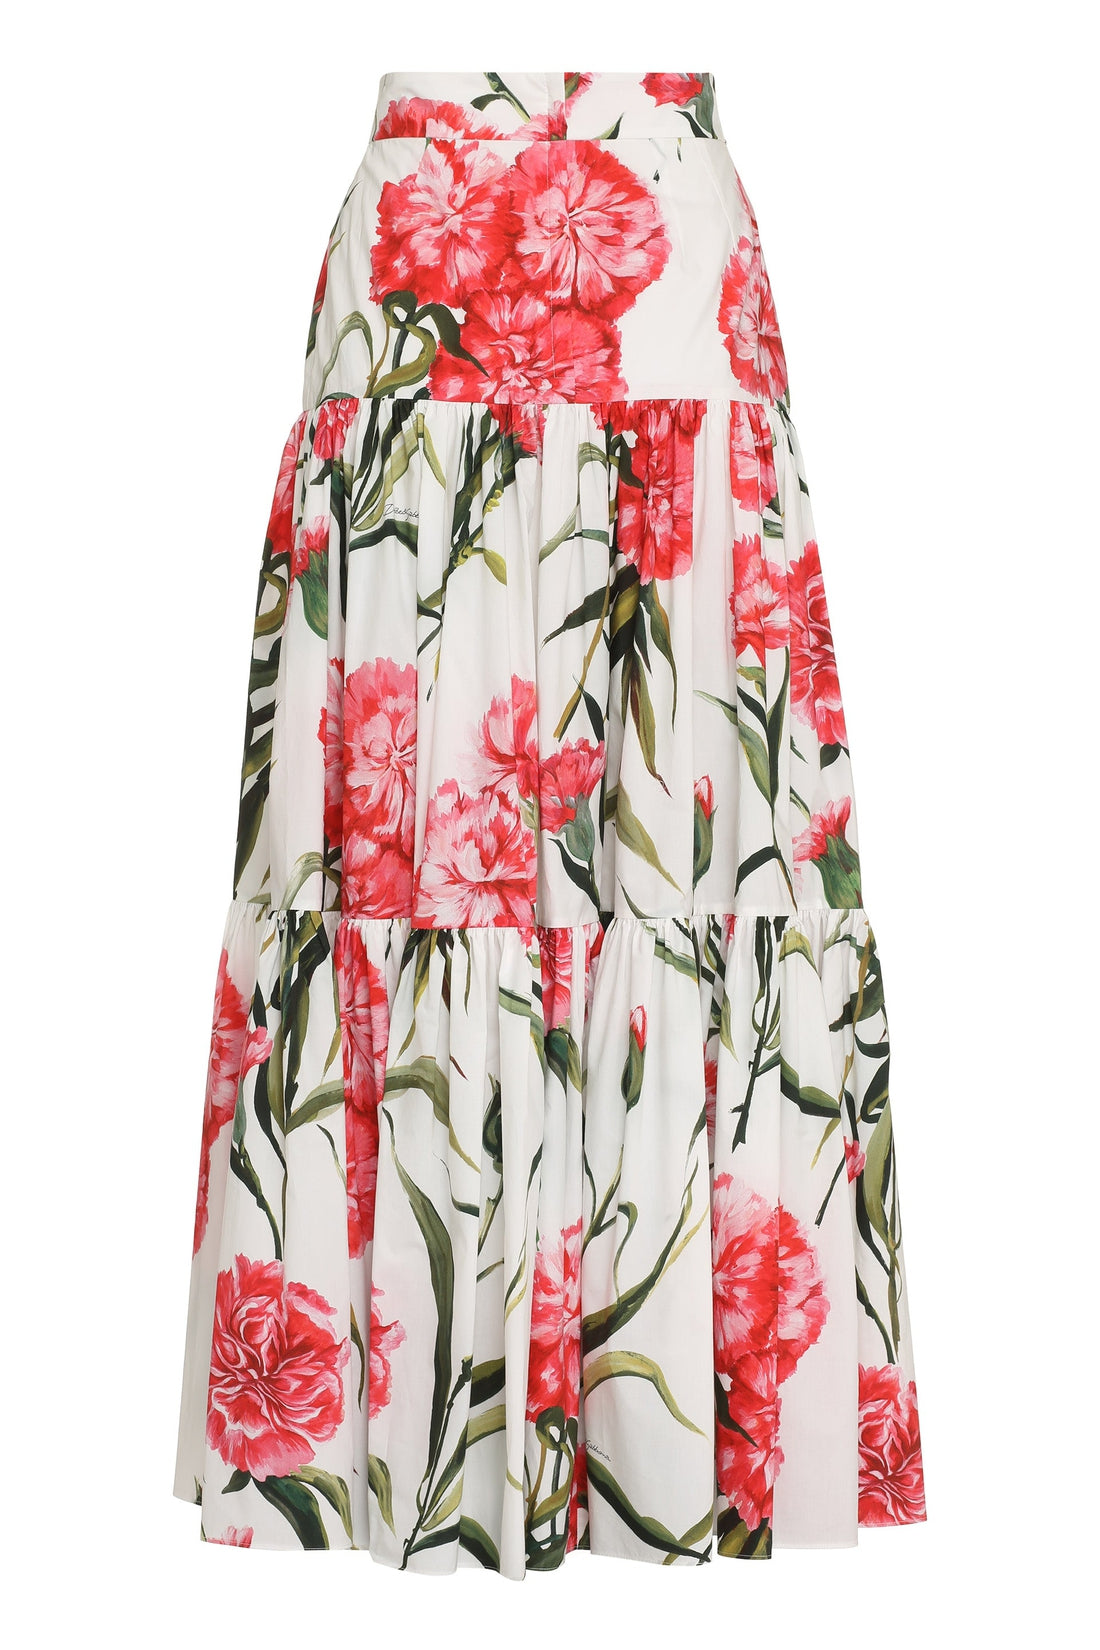 Dolce & Gabbana-OUTLET-SALE-Floral print maxi skirt-ARCHIVIST